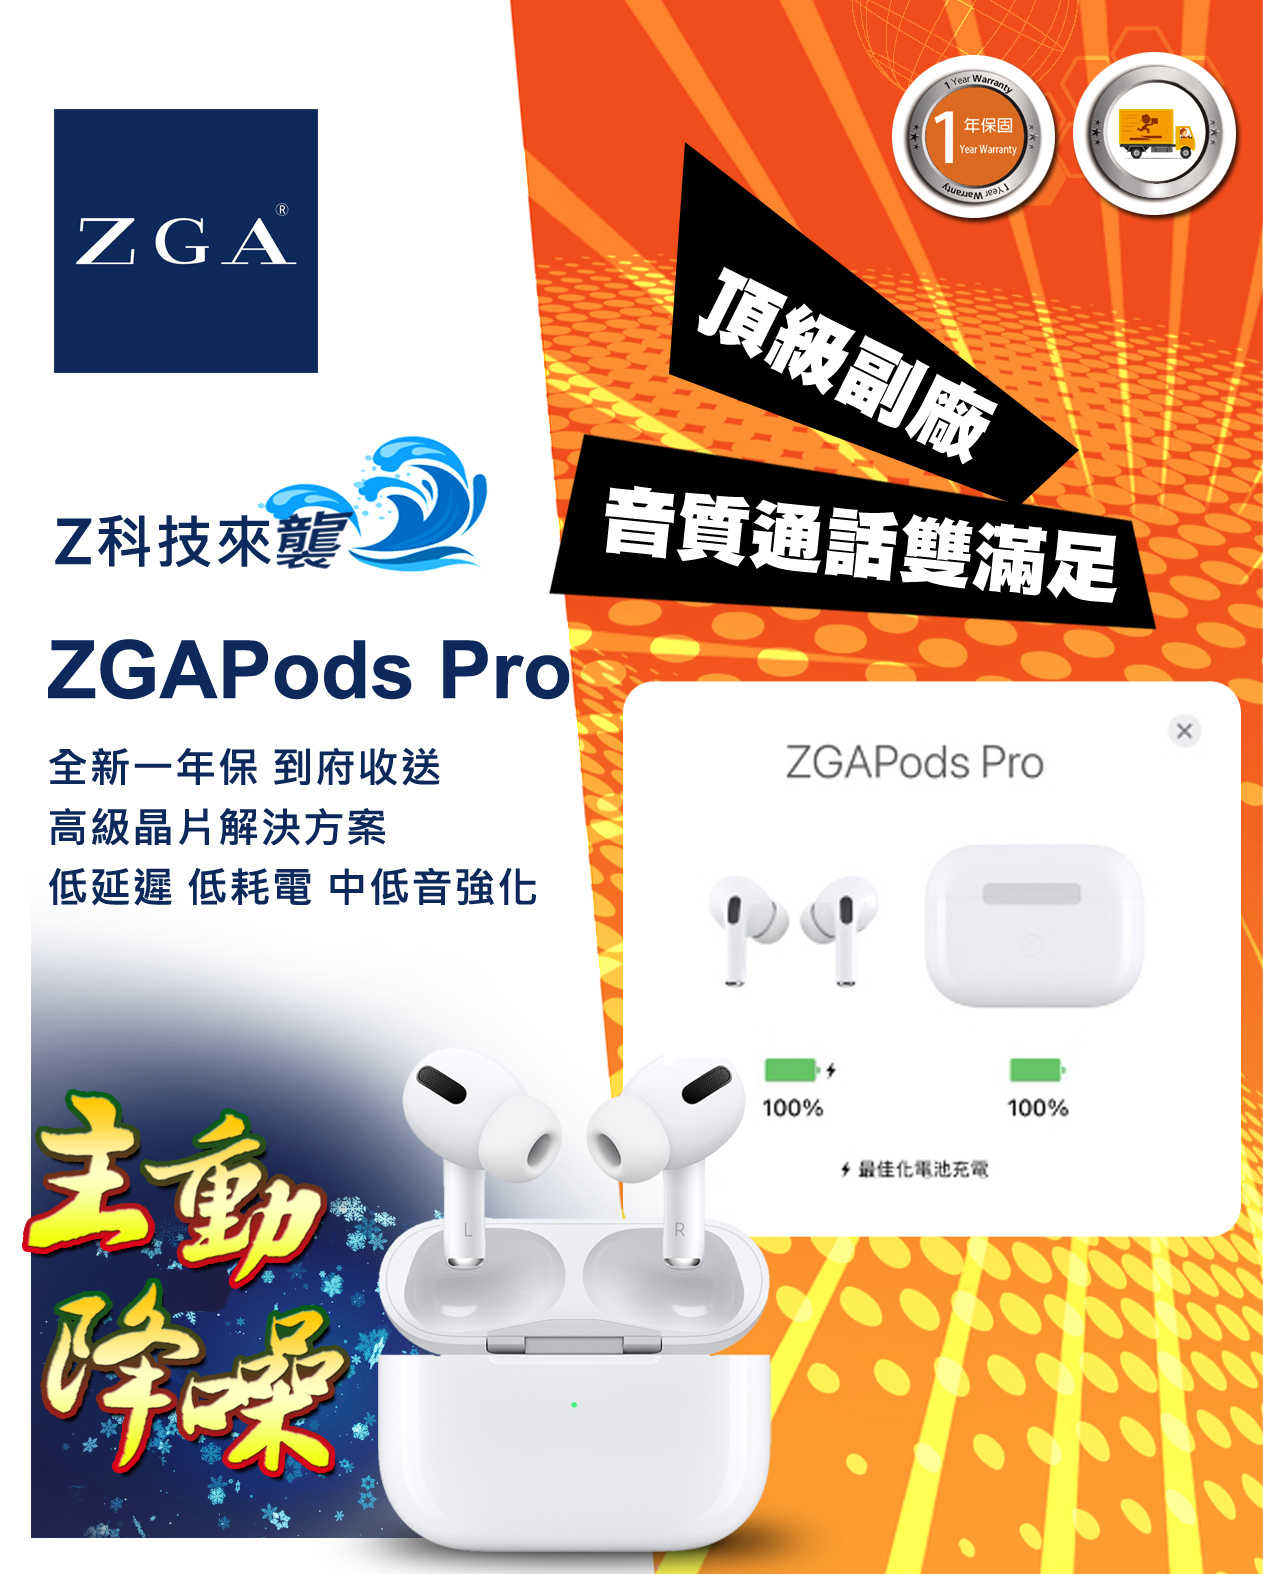 ZGA原廠 ZGAPods Pro 藍芽耳機 主動降躁/通透 完美頂配降躁 通話清晰 中低音夠力 一年支援到府收送